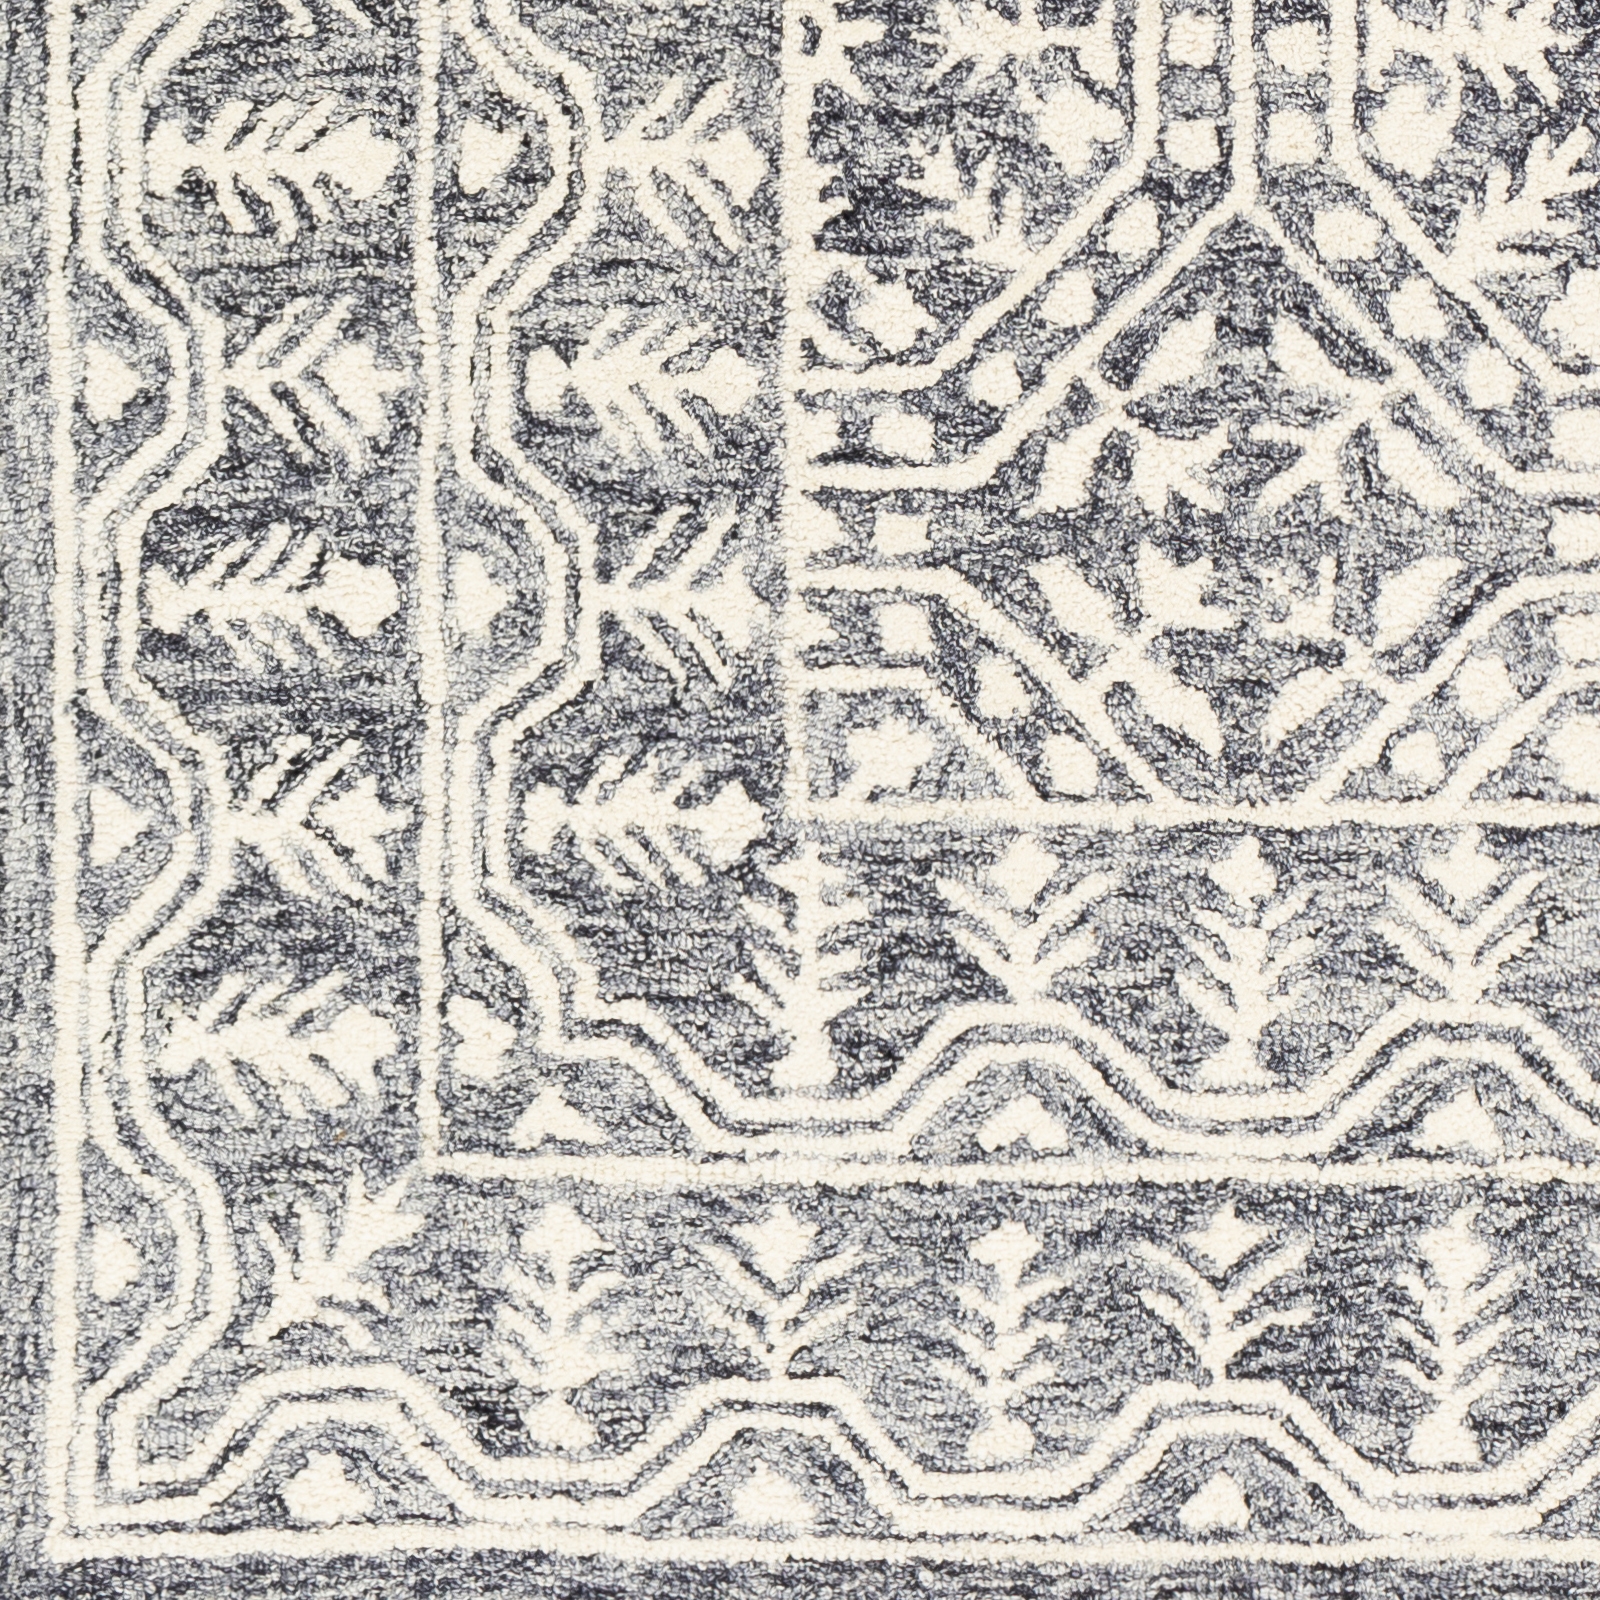 Granada Rug, 8' x 10' - Image 5